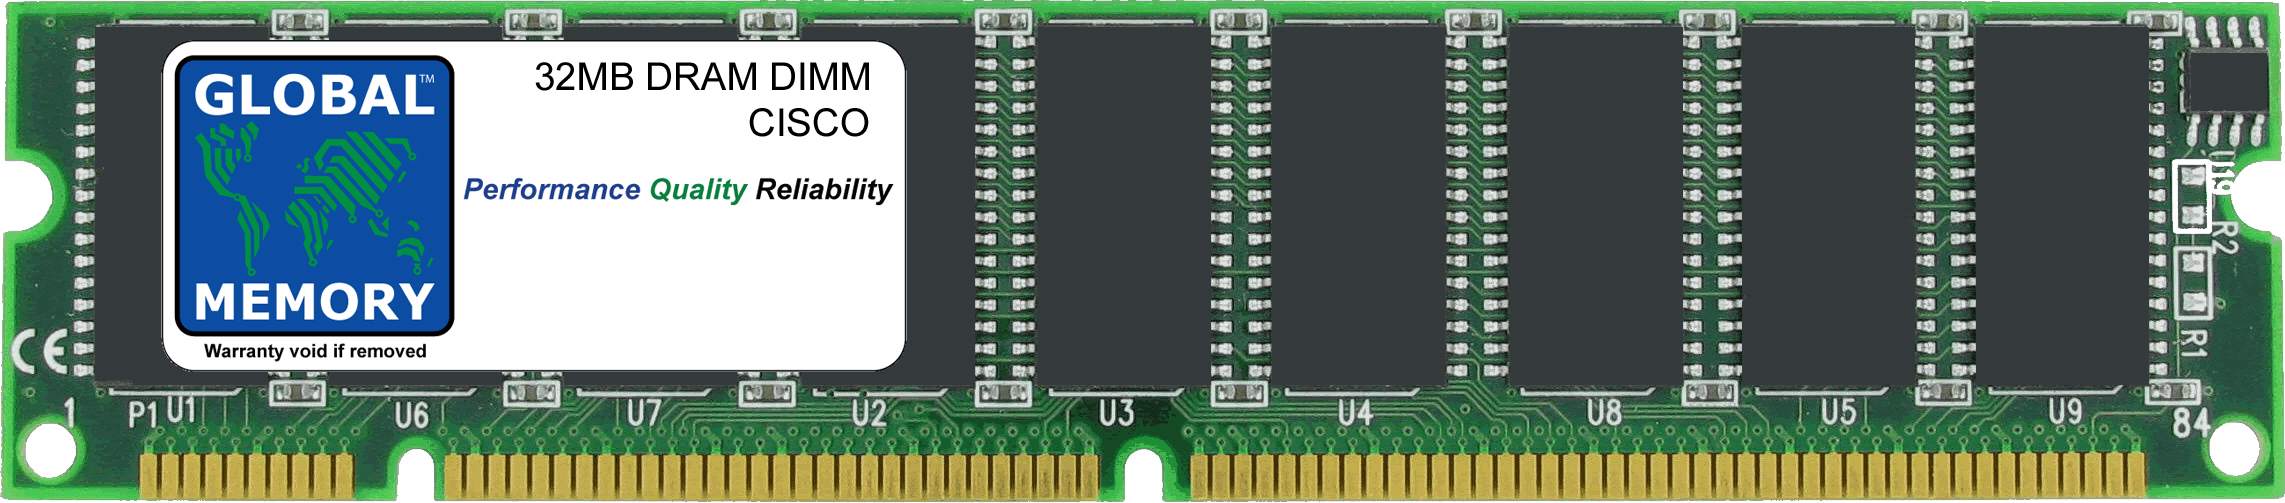 32MB DRAM DIMM MEMORY RAM FOR CISCO RSP7000 VIP2-50 / RSP7010 VIP2-50 (MEM-VIP250-32M-D)